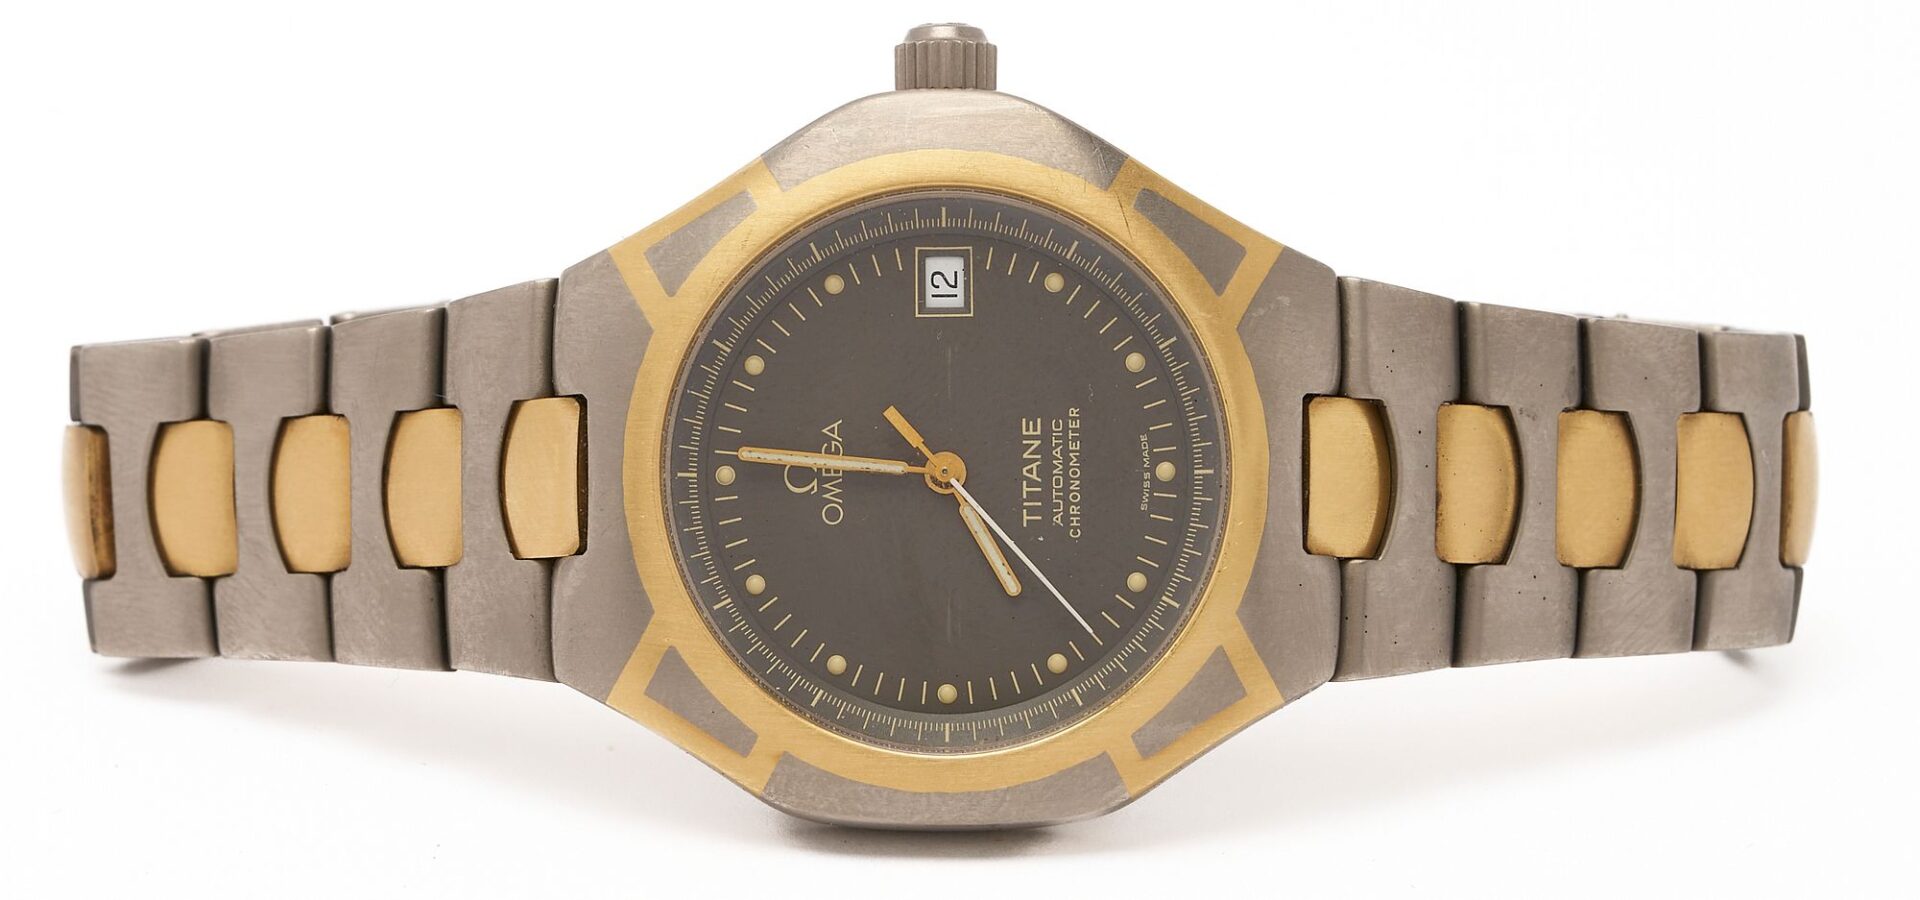 Lot 839: Omega Seamaster Titane Automatic Chronometer Wristwatch